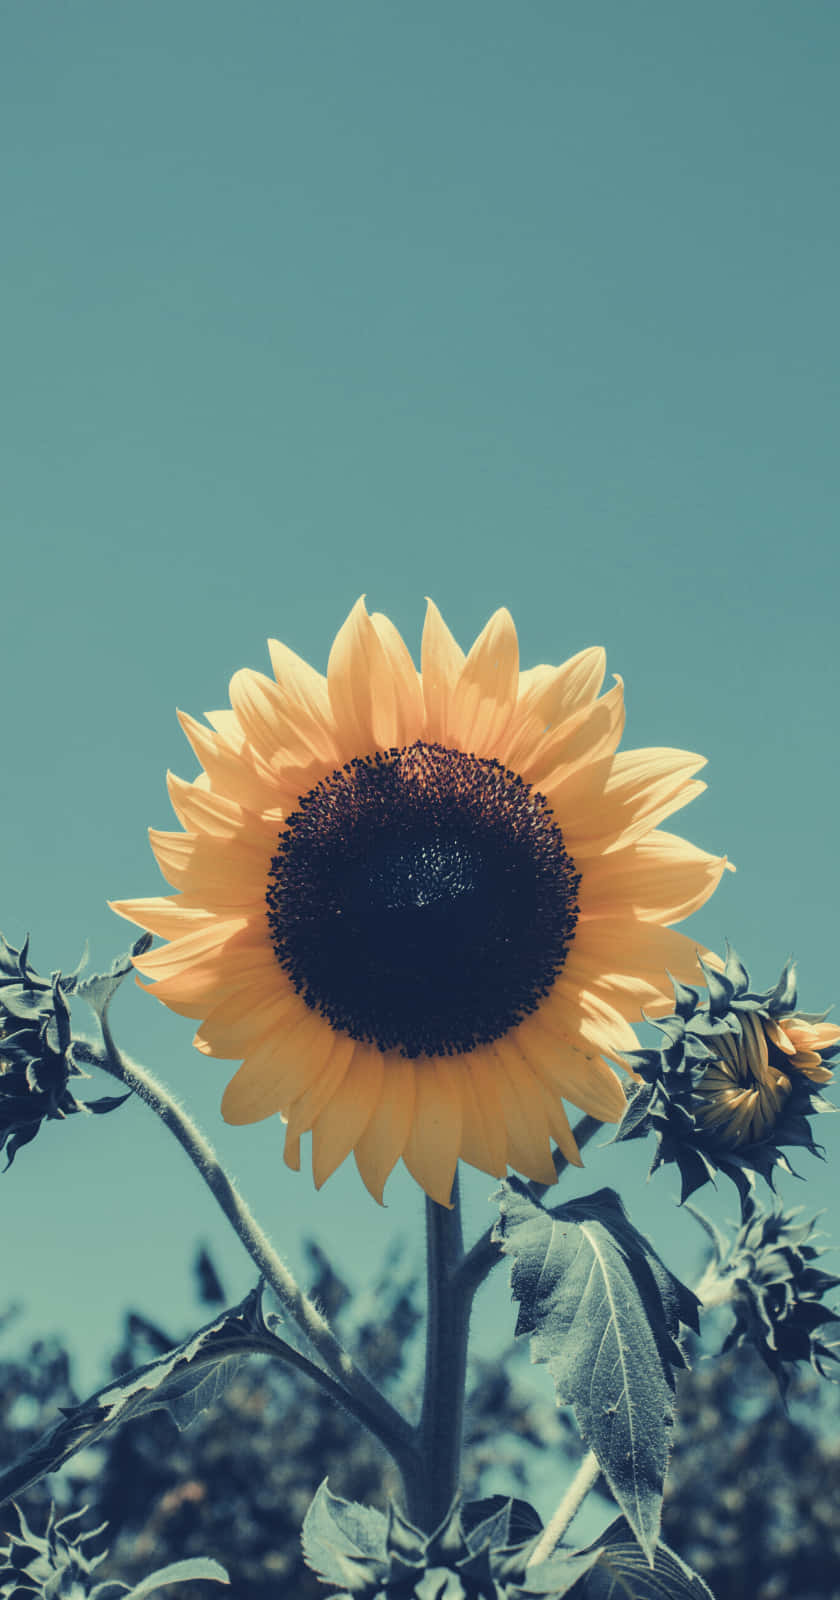 Heathy Sunflower Phone With Blue Skies Wallpaper